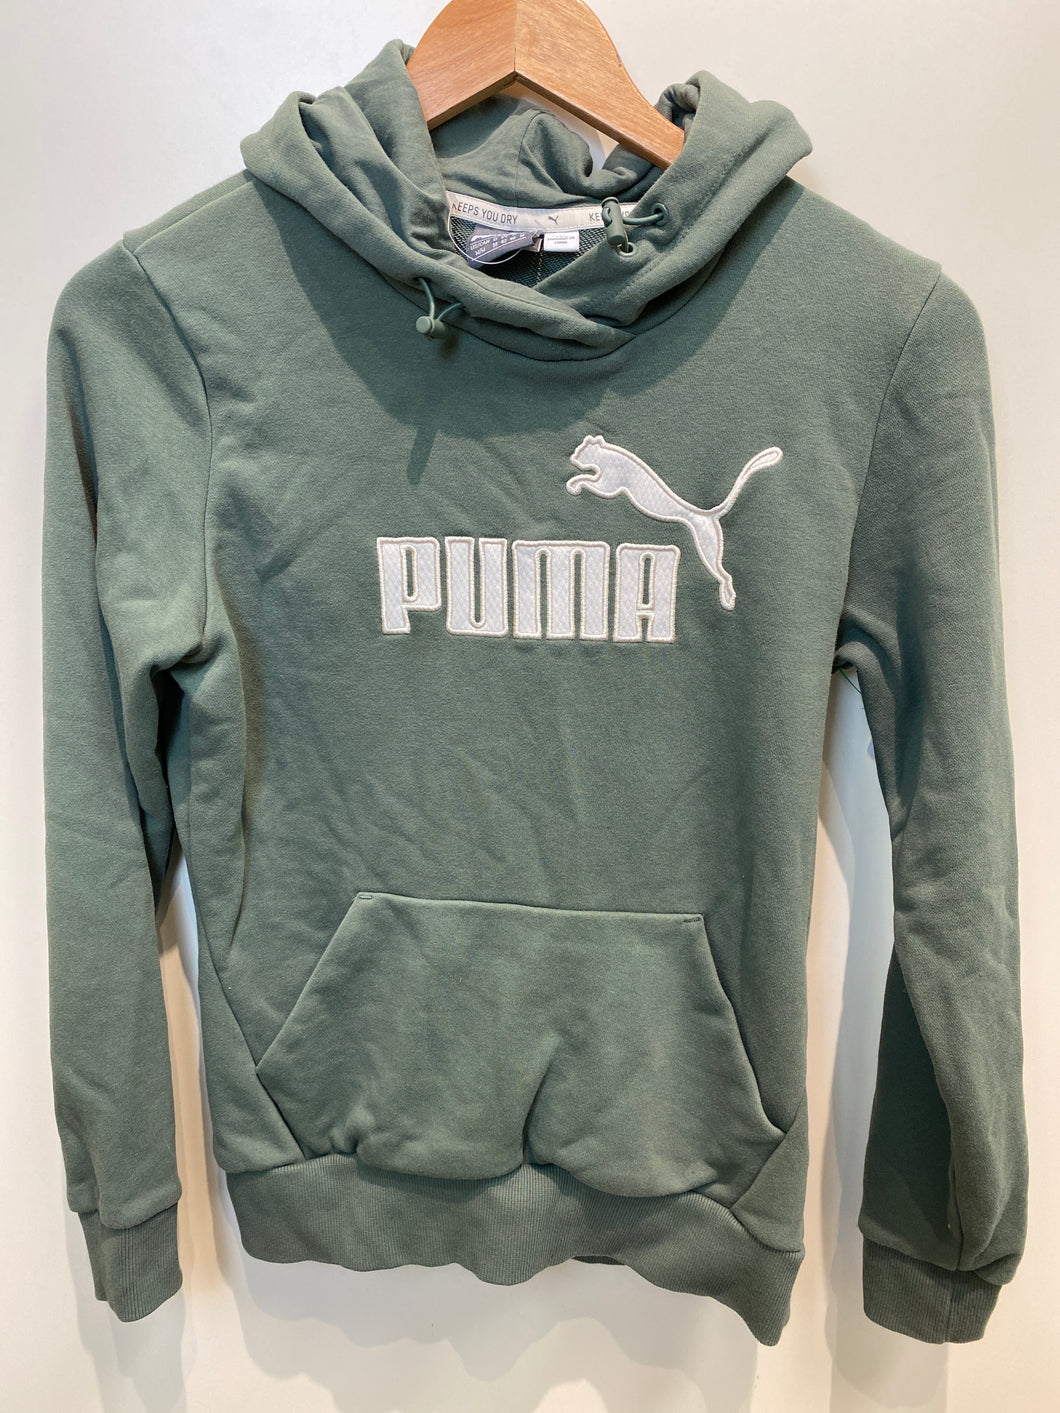 Puma Womens Sweatshirt Size Medium